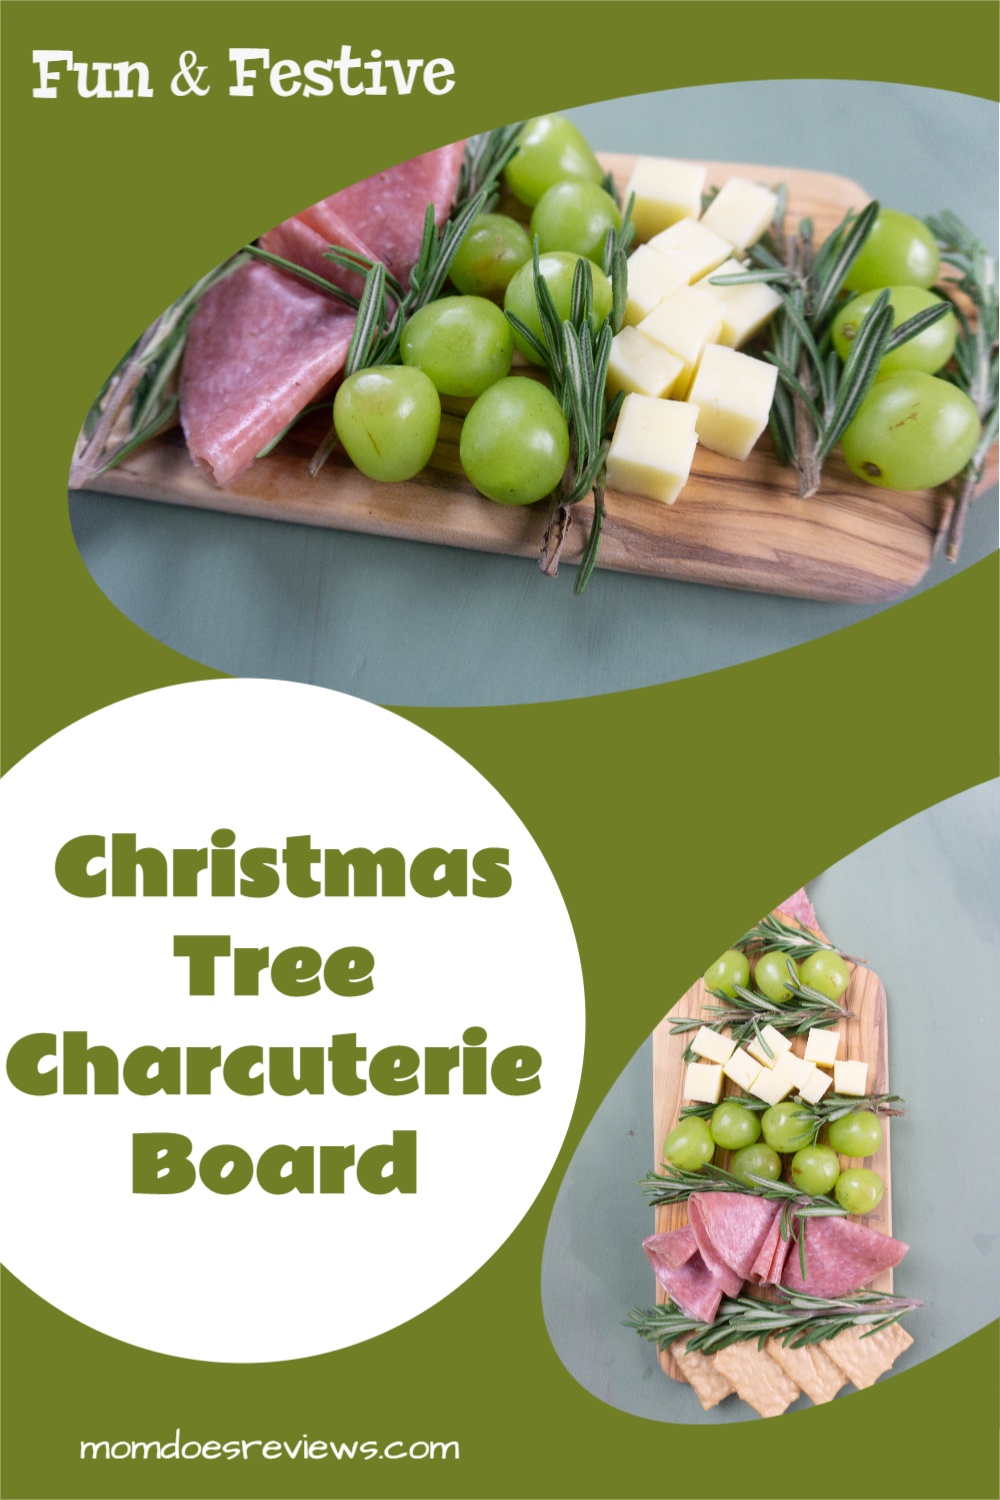 Festive & Easy Christmas Tree Charcuterie Board